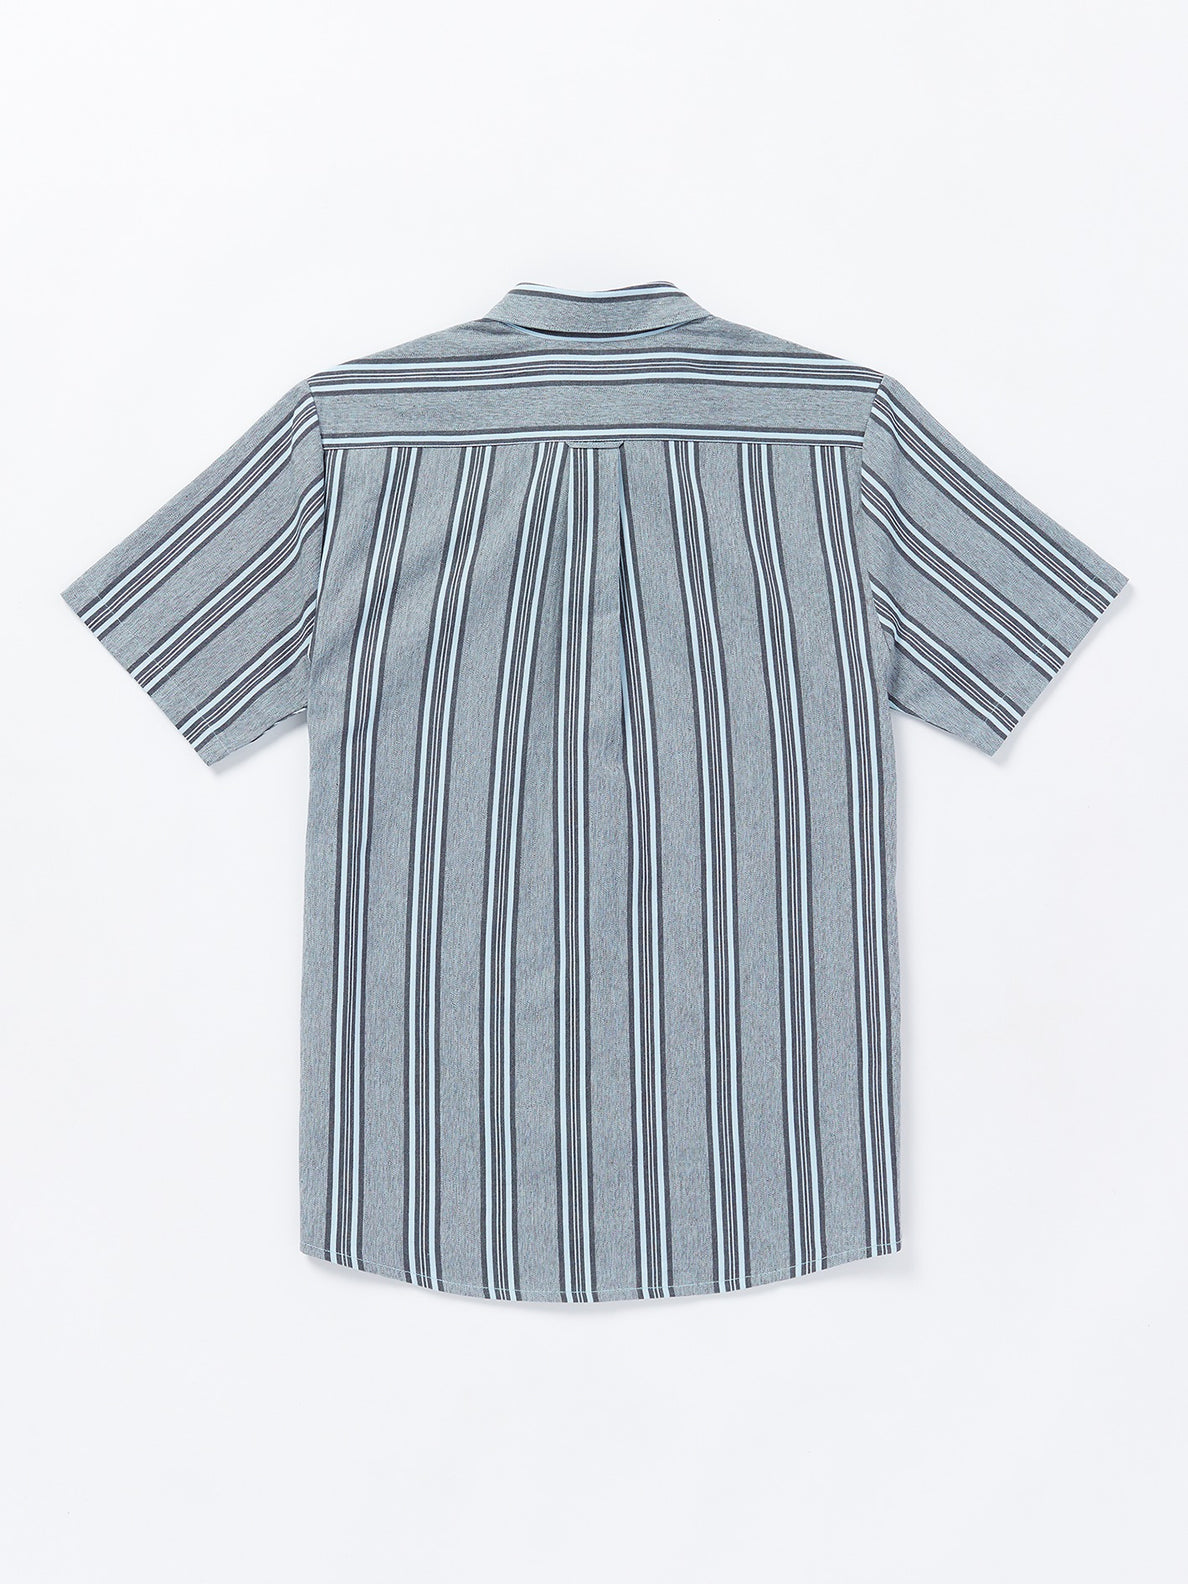 Newbar Stripe Short Sleeve Shirt - Celestial Blue